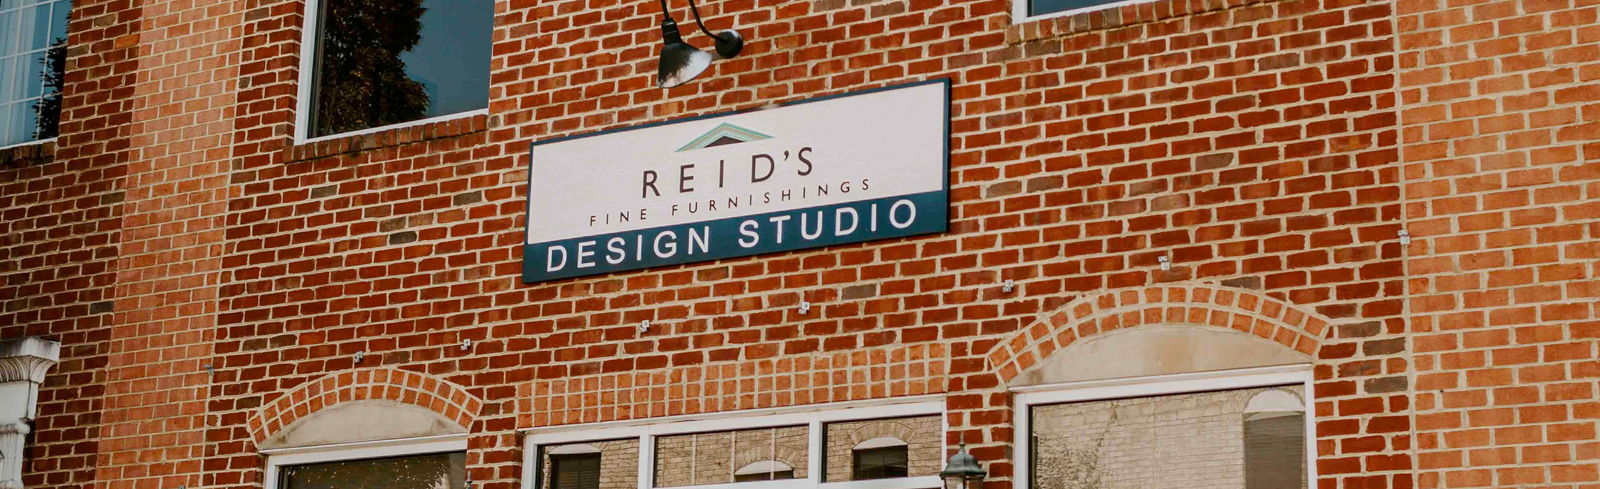 Reid's Fine Furnishings Design Studio brick storefront